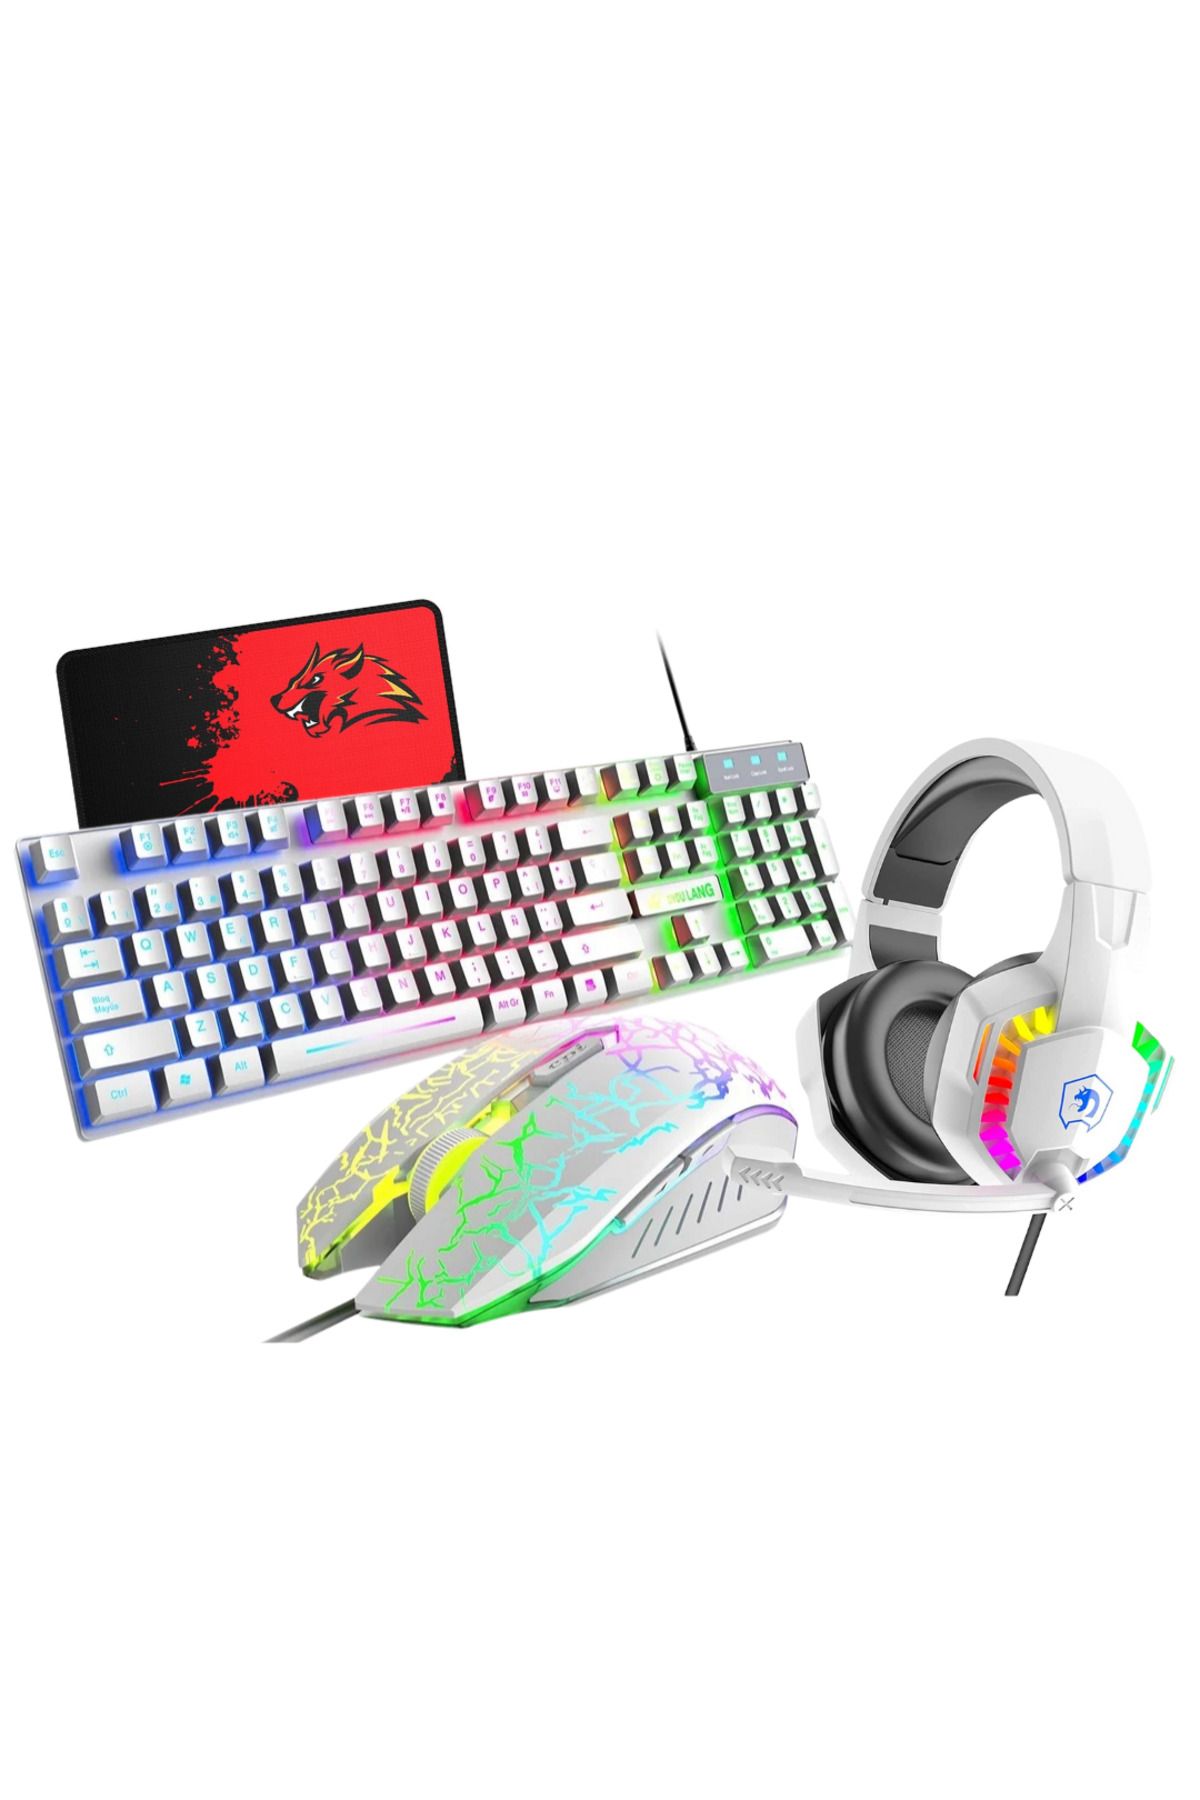 ZIYOULANG T11 Gaming Oyuncu Klavye Mouse Mousepad Oyuncu Kulaklığı 4in1 Set Karbon Türkçe Q Rgb Işıklı